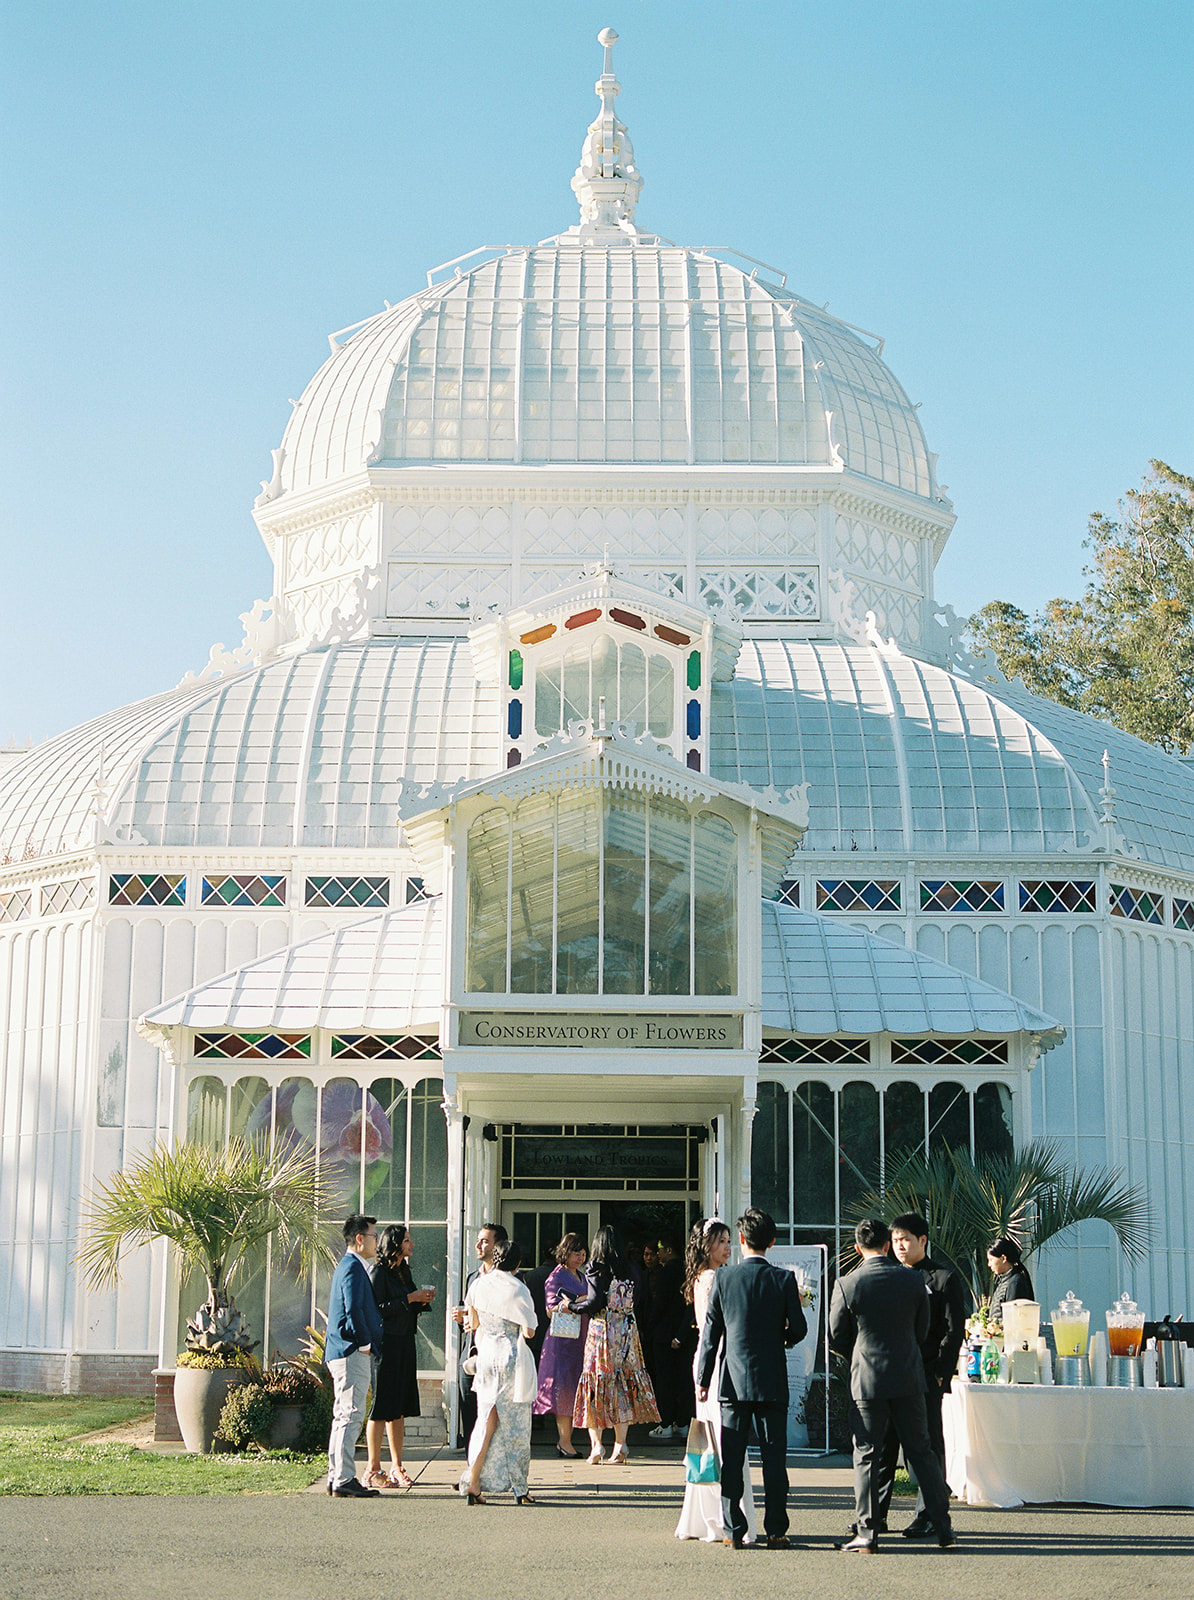 Conservatory of Flowers wedding reception